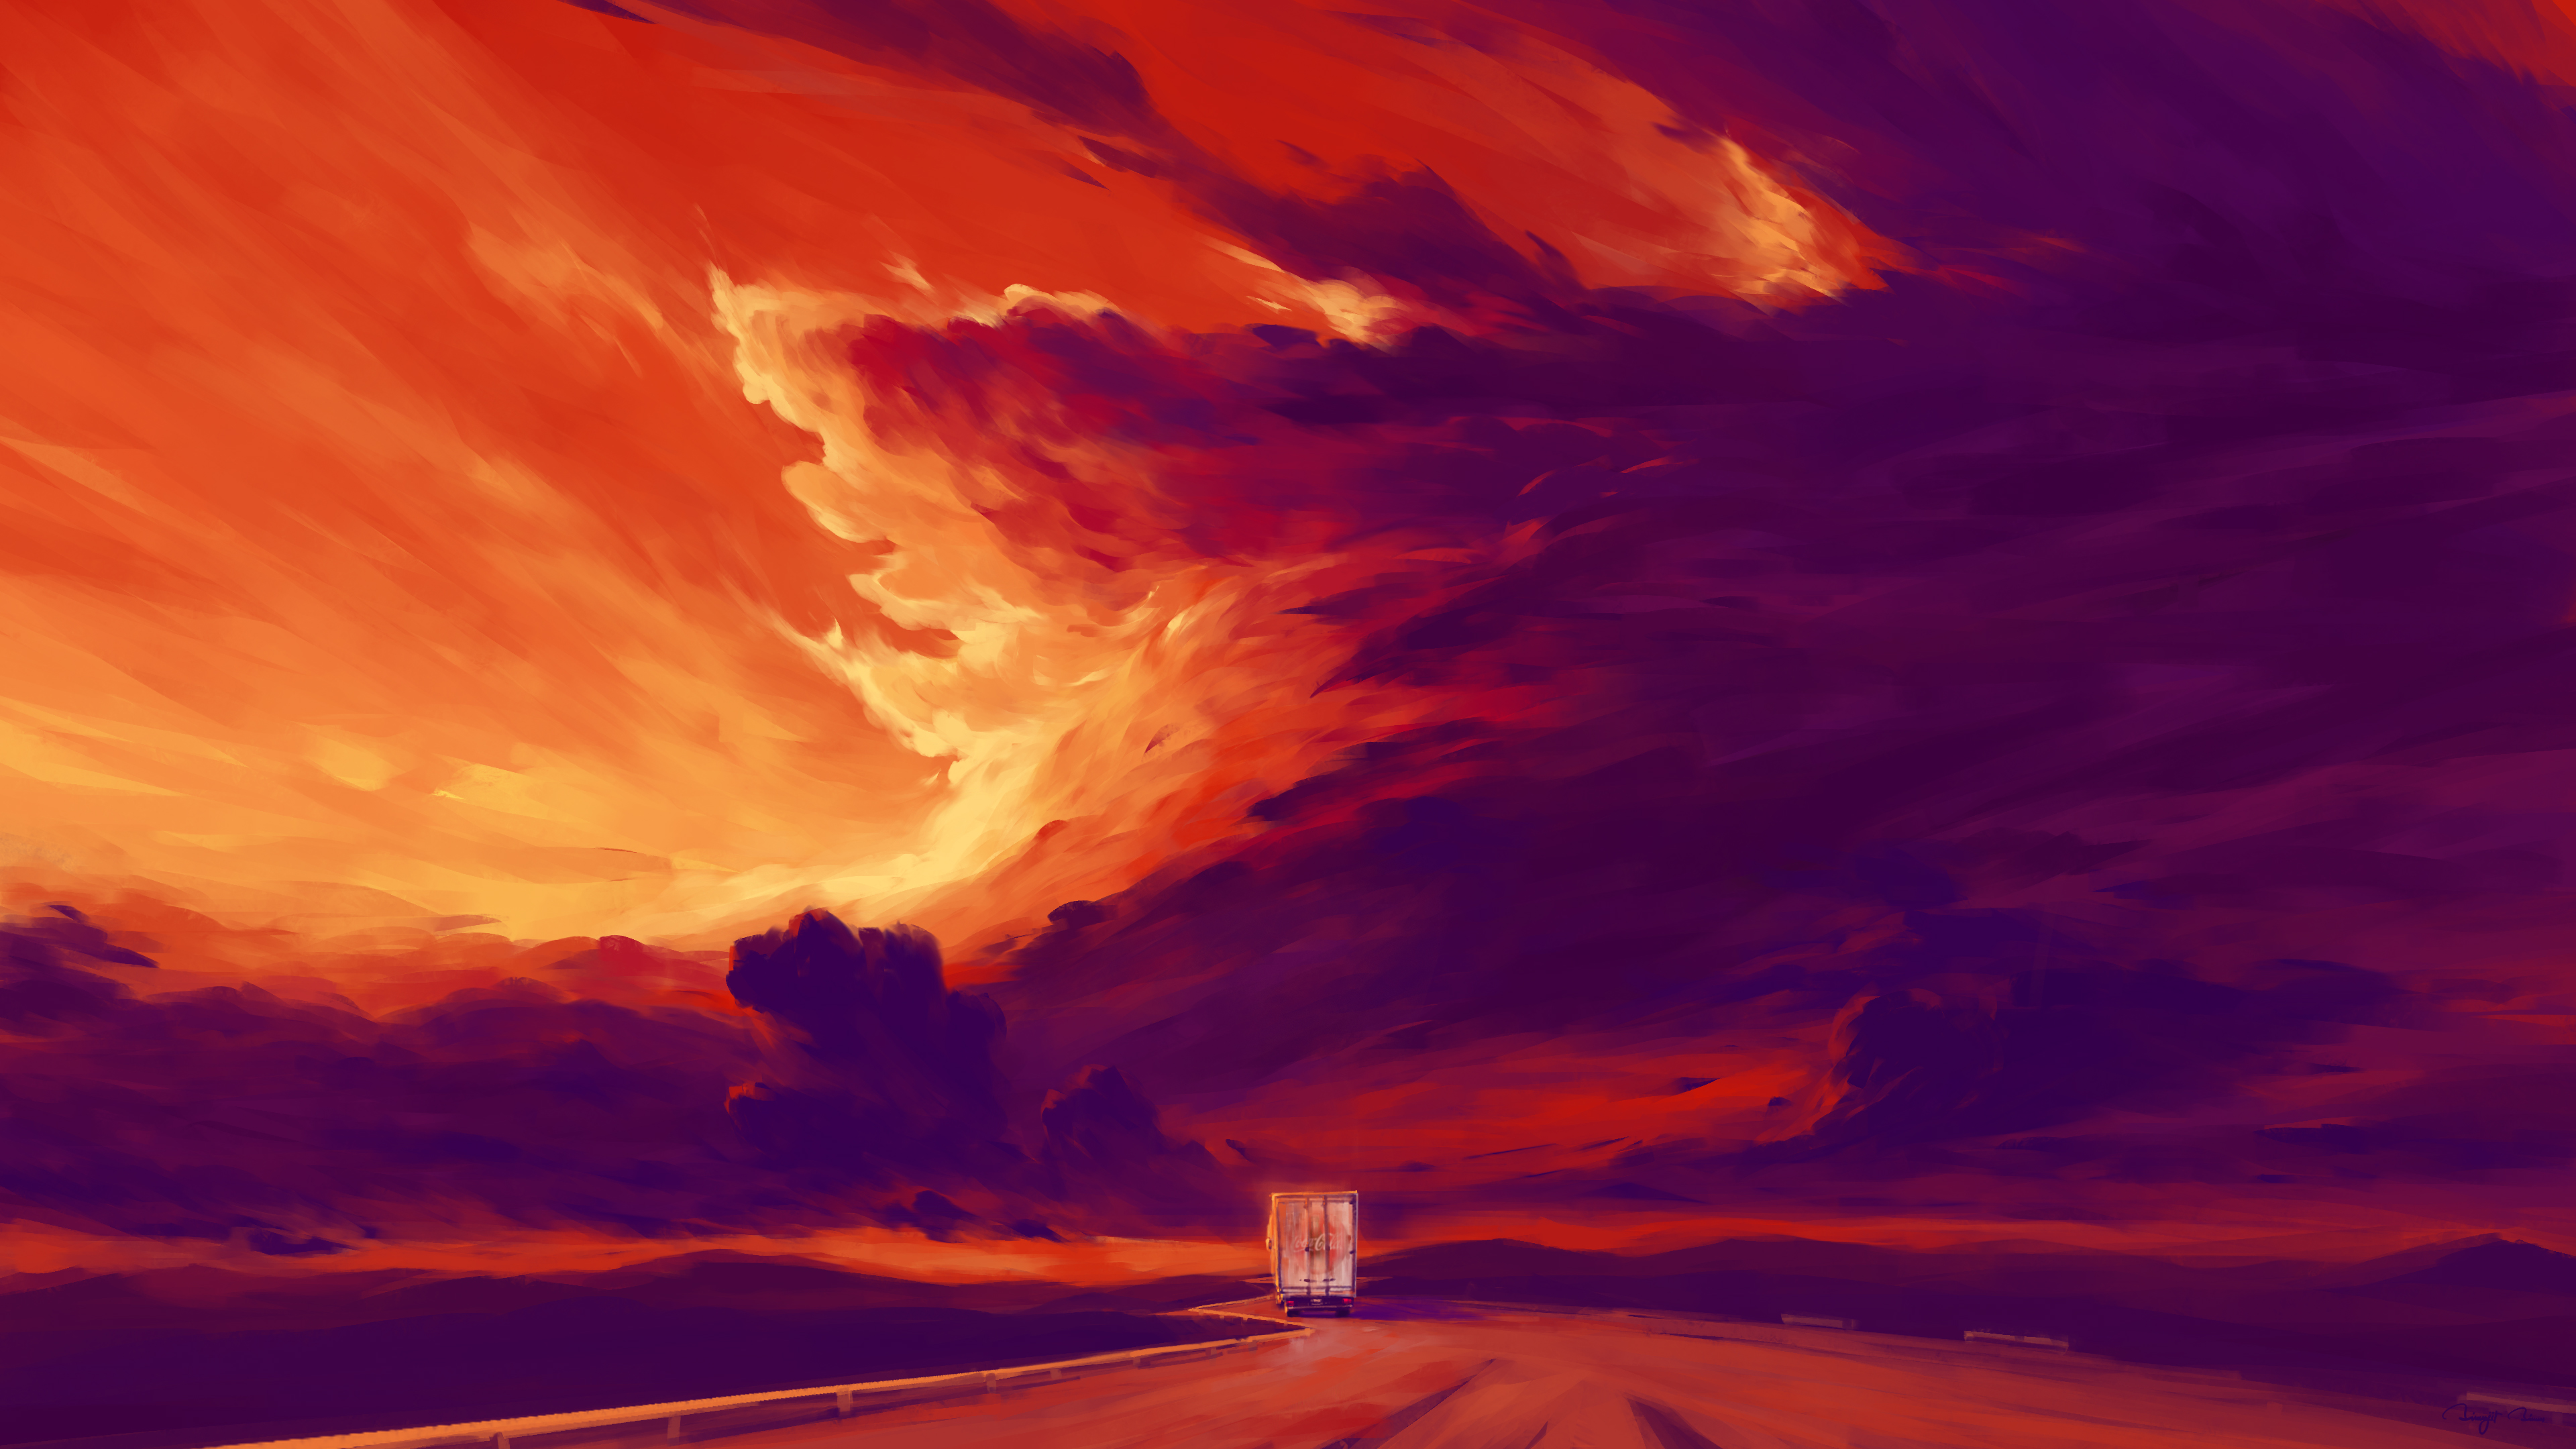 BisBiswas Landscape Clouds Sunset Road Truck Digital Art Artwork Illustration Painting Signature 4K 3840x2160